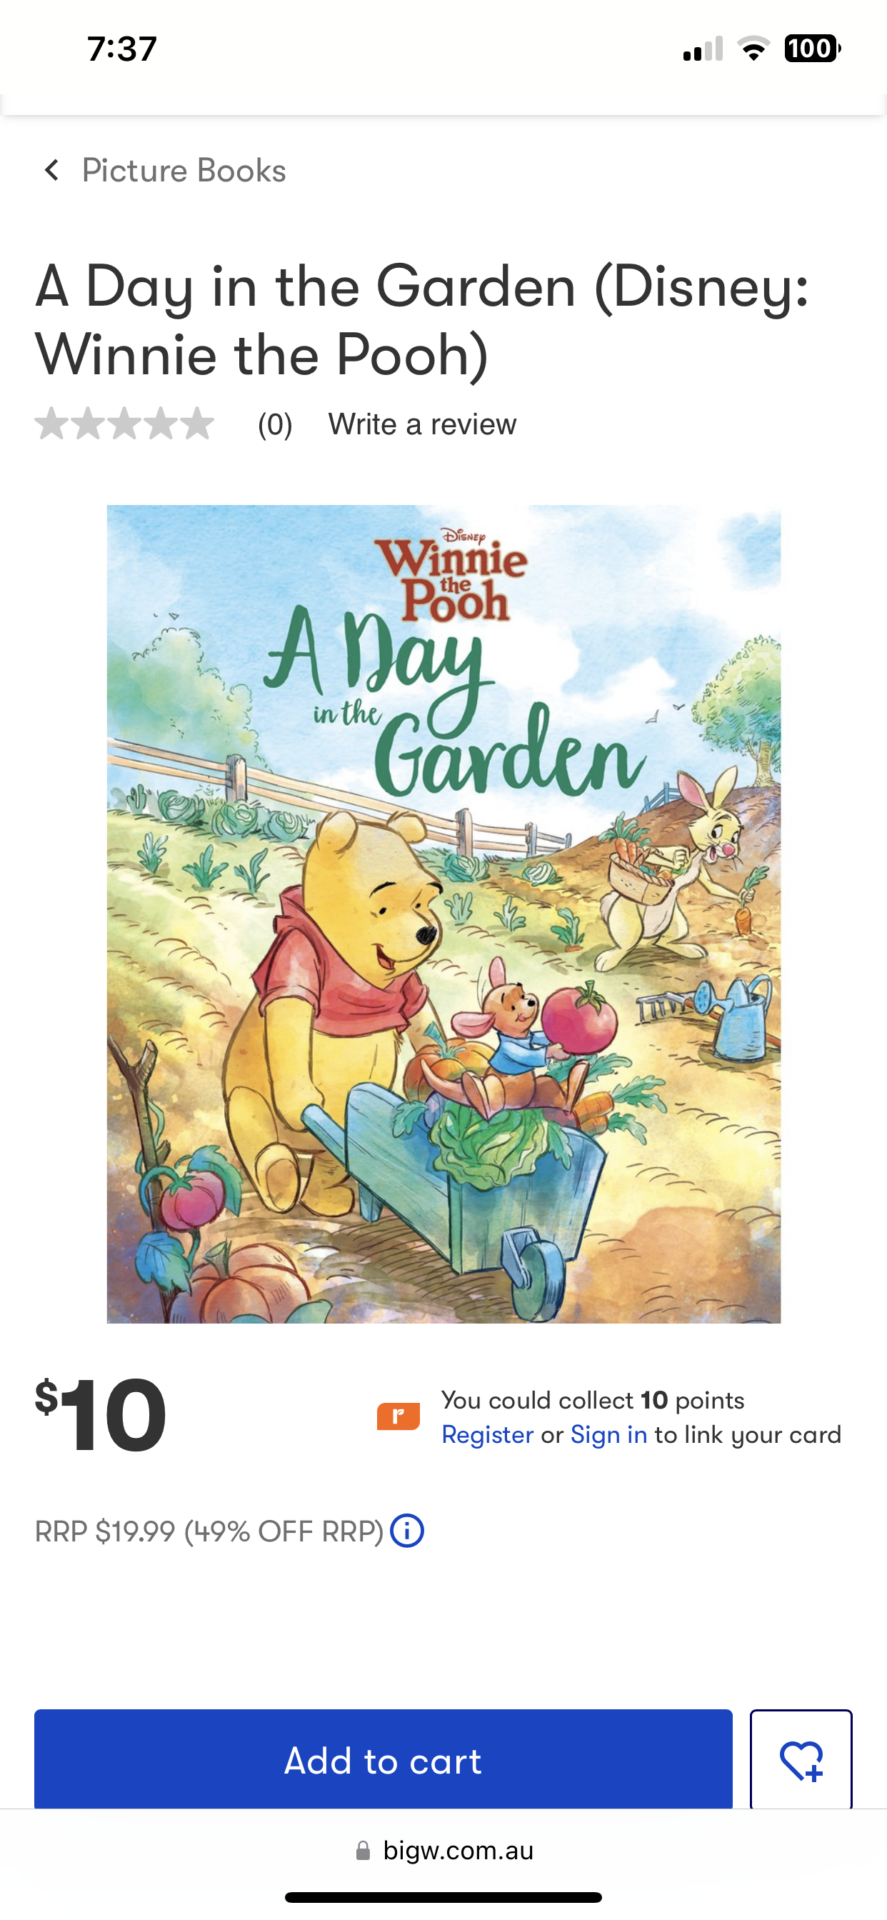 A Day in the Garden (Disney: Winnie the Pooh)